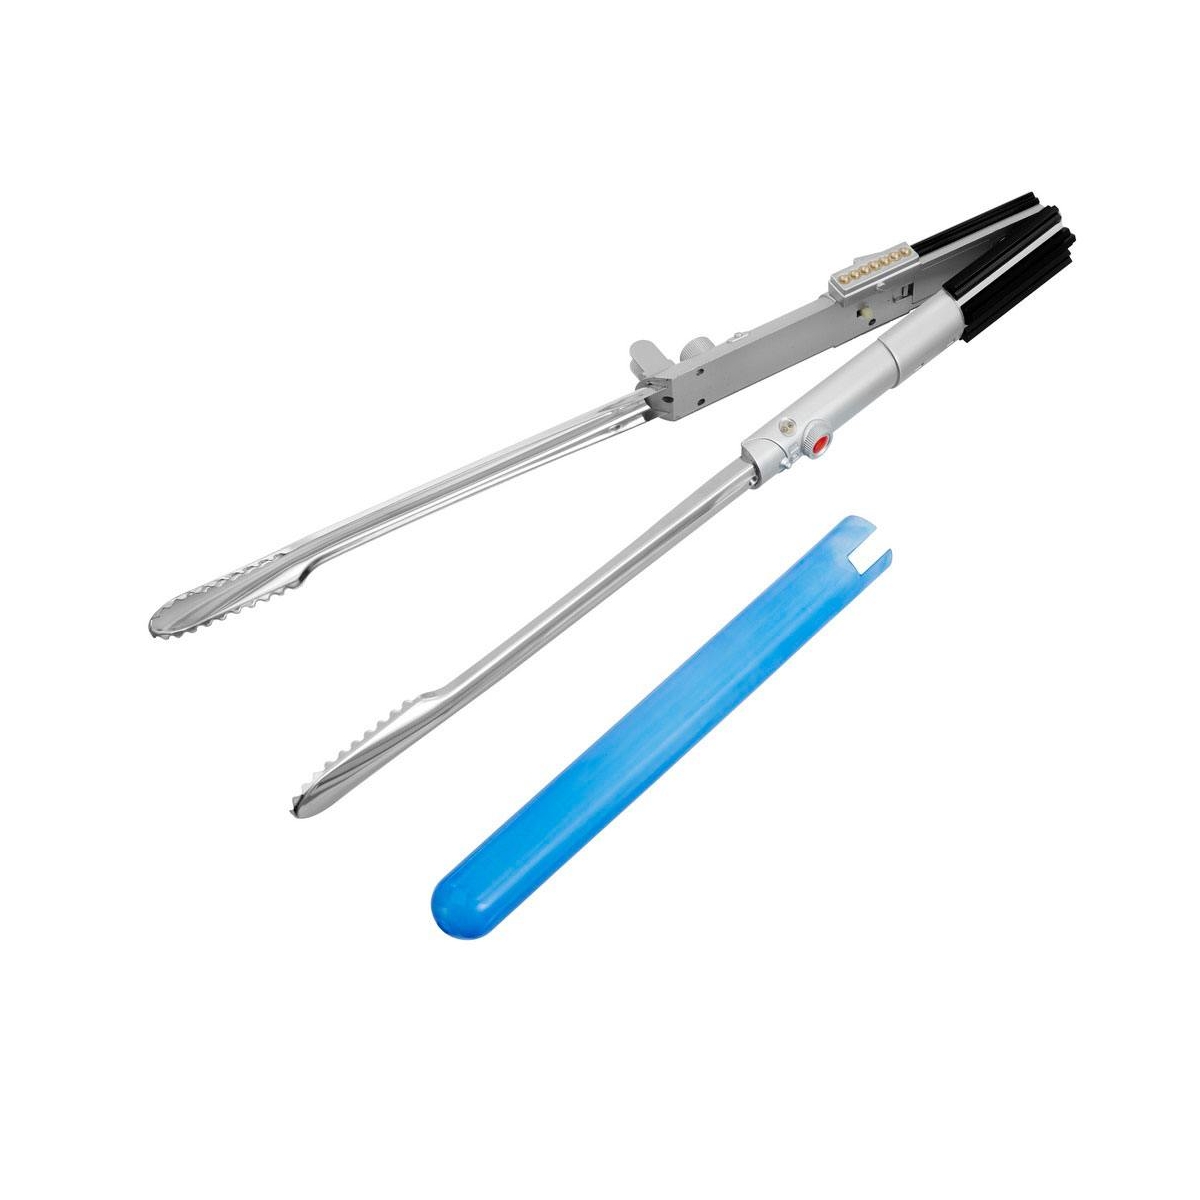 Star Wars - Pince barbecue sabre laser Luke Skywalker - Figurine